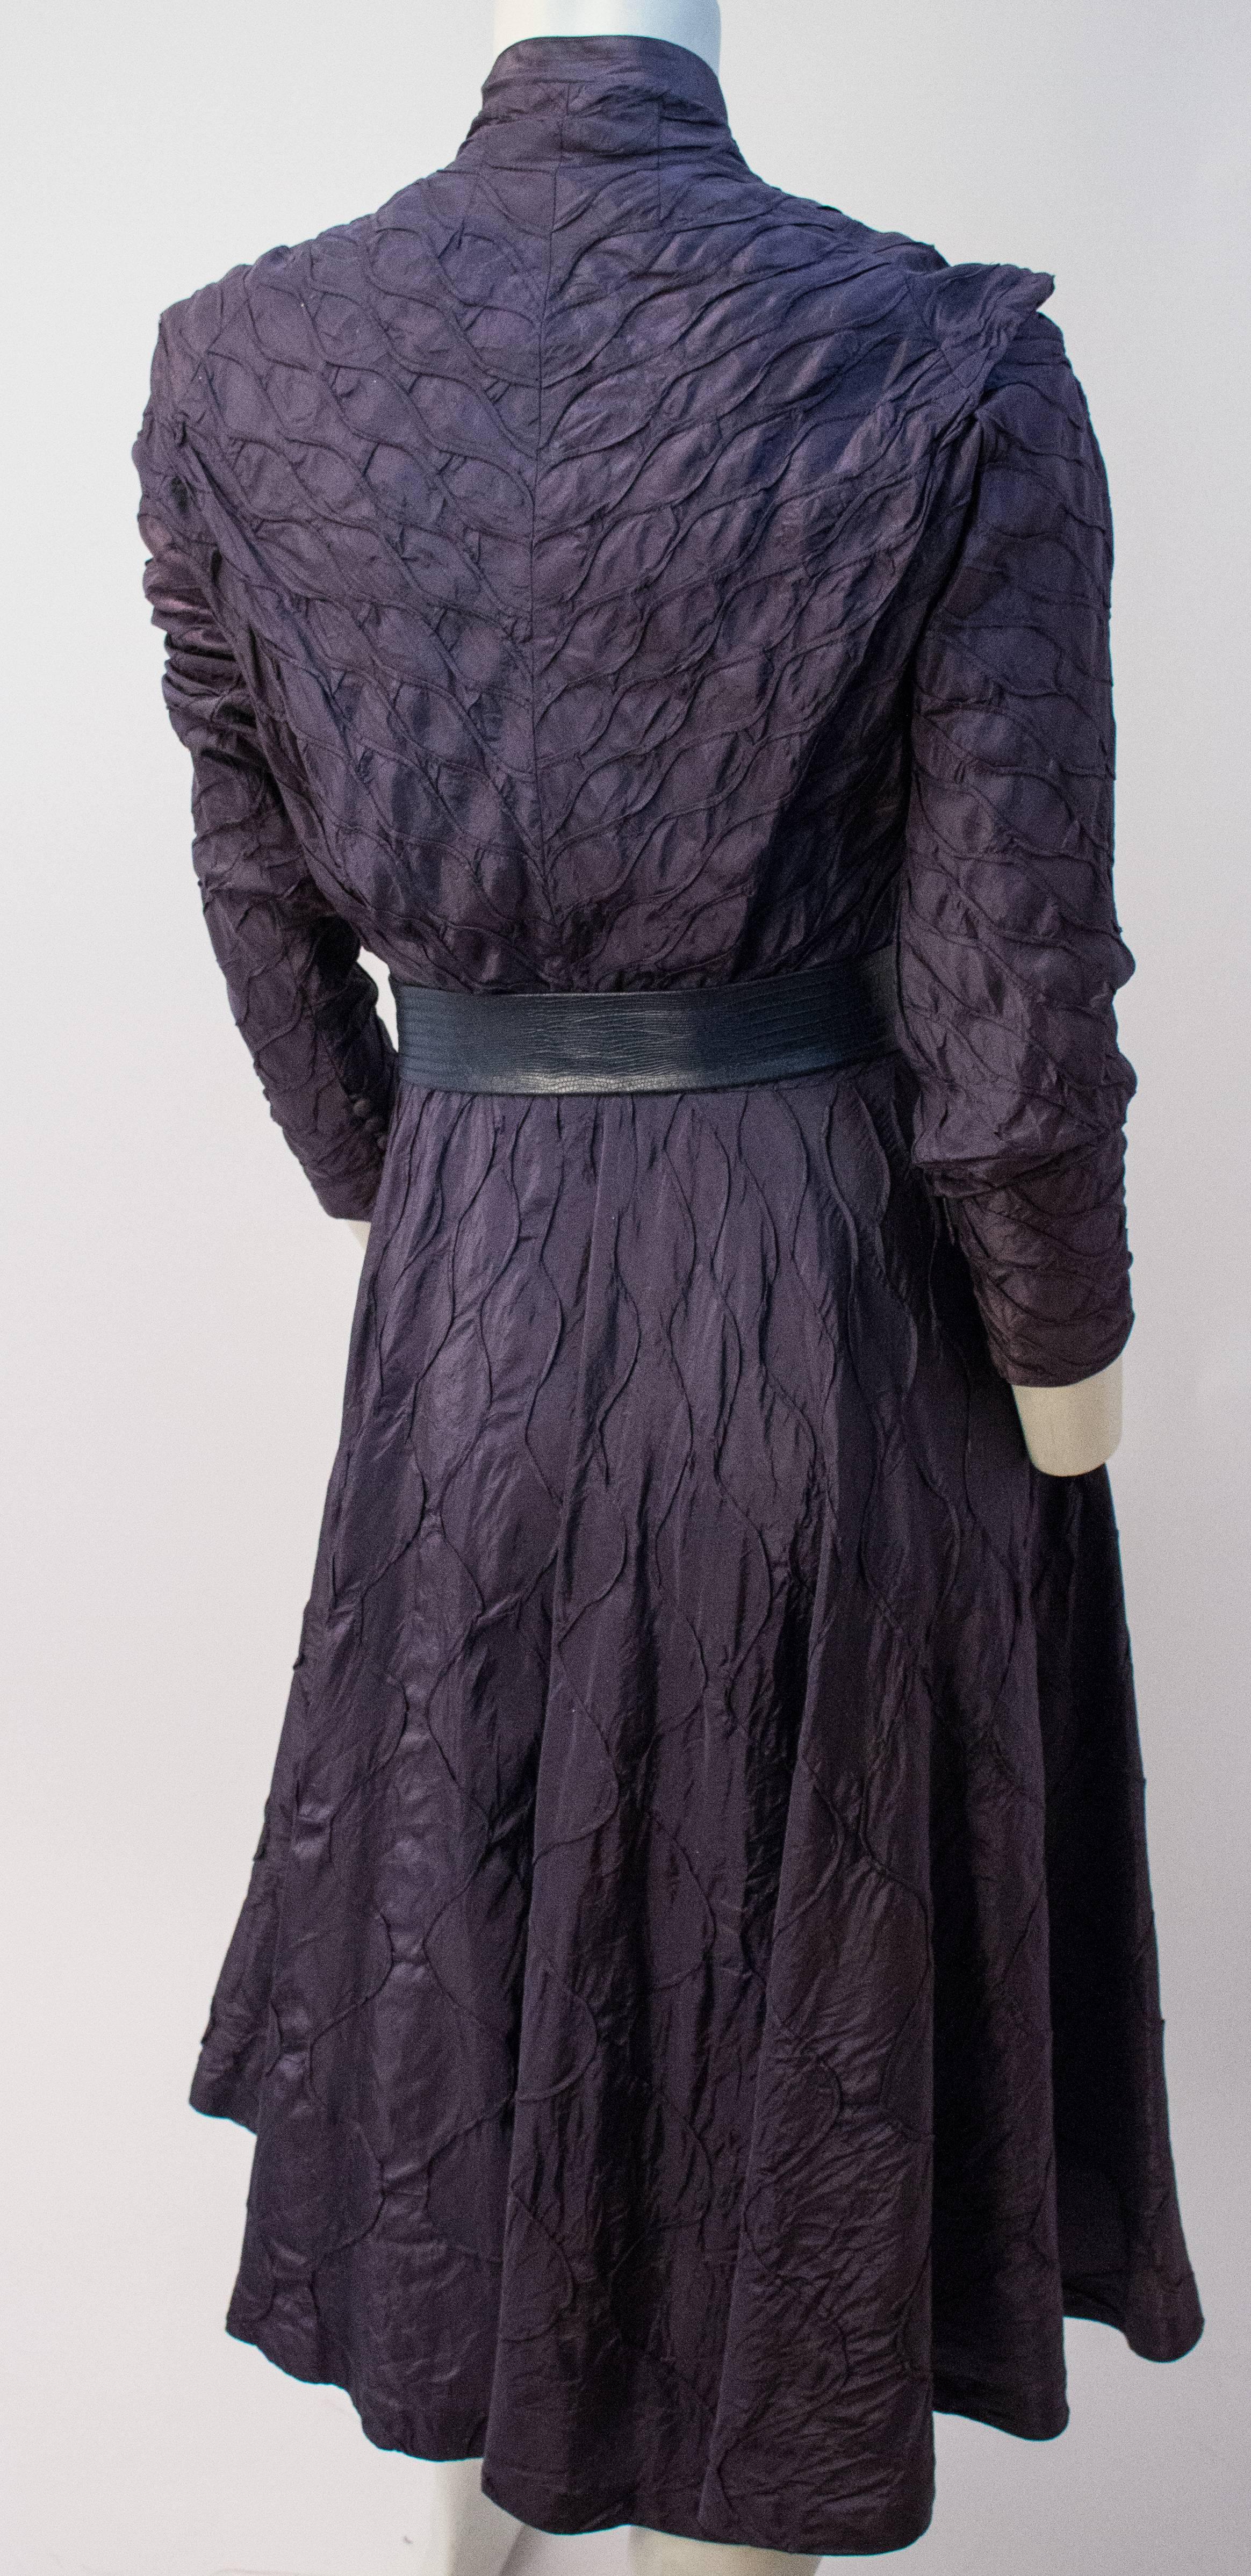 50s Aubergine Smocked Dress. Front button and metal side zip closures. Belt included, unoriginal. 